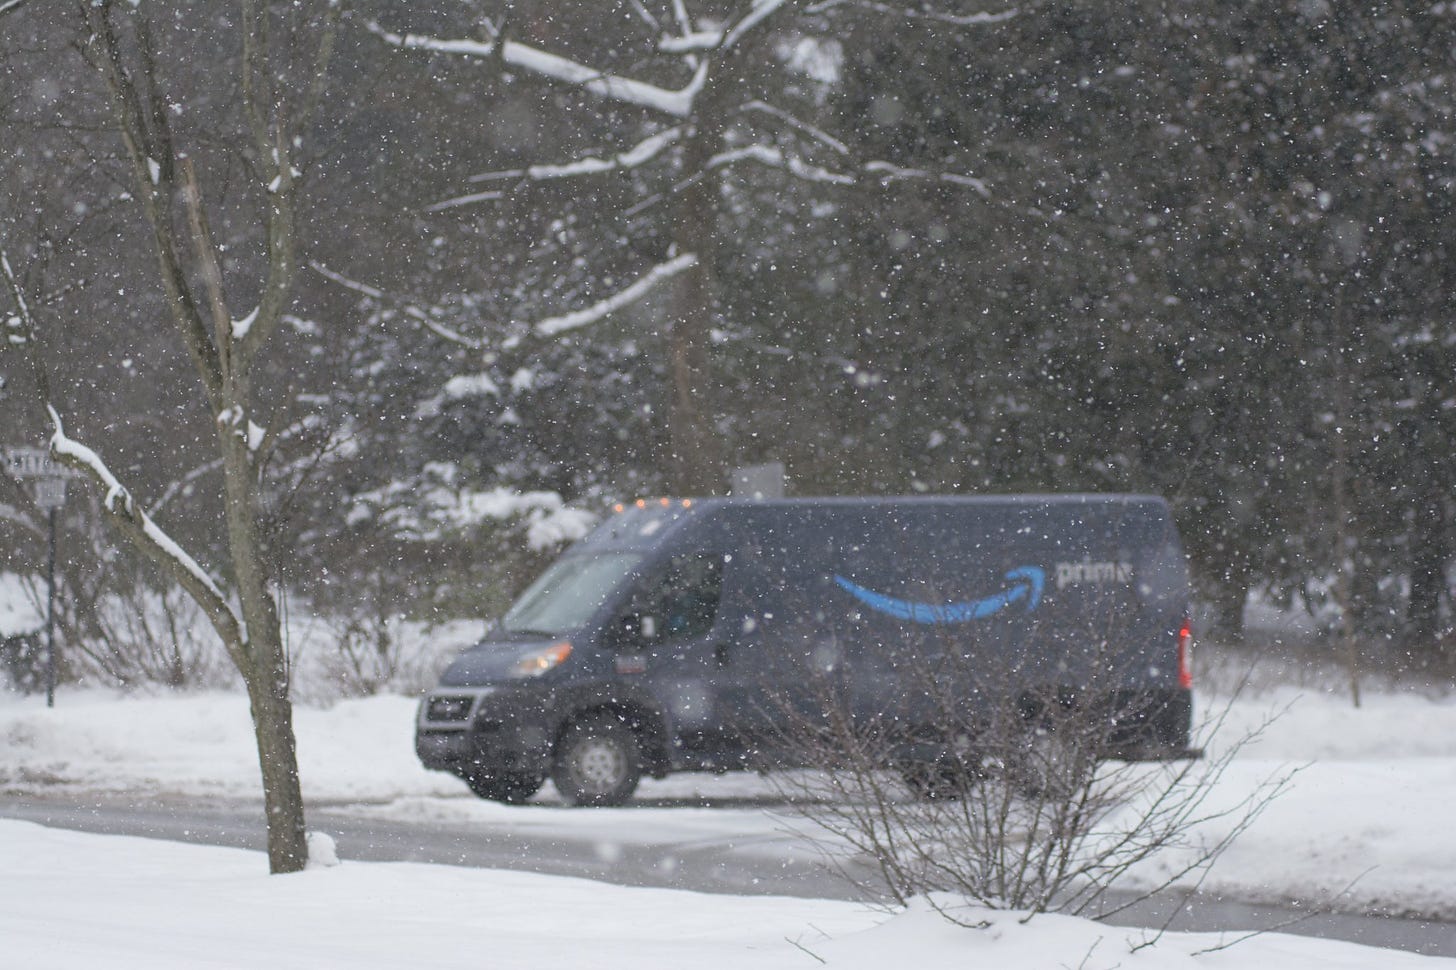 Amazon van in the snow